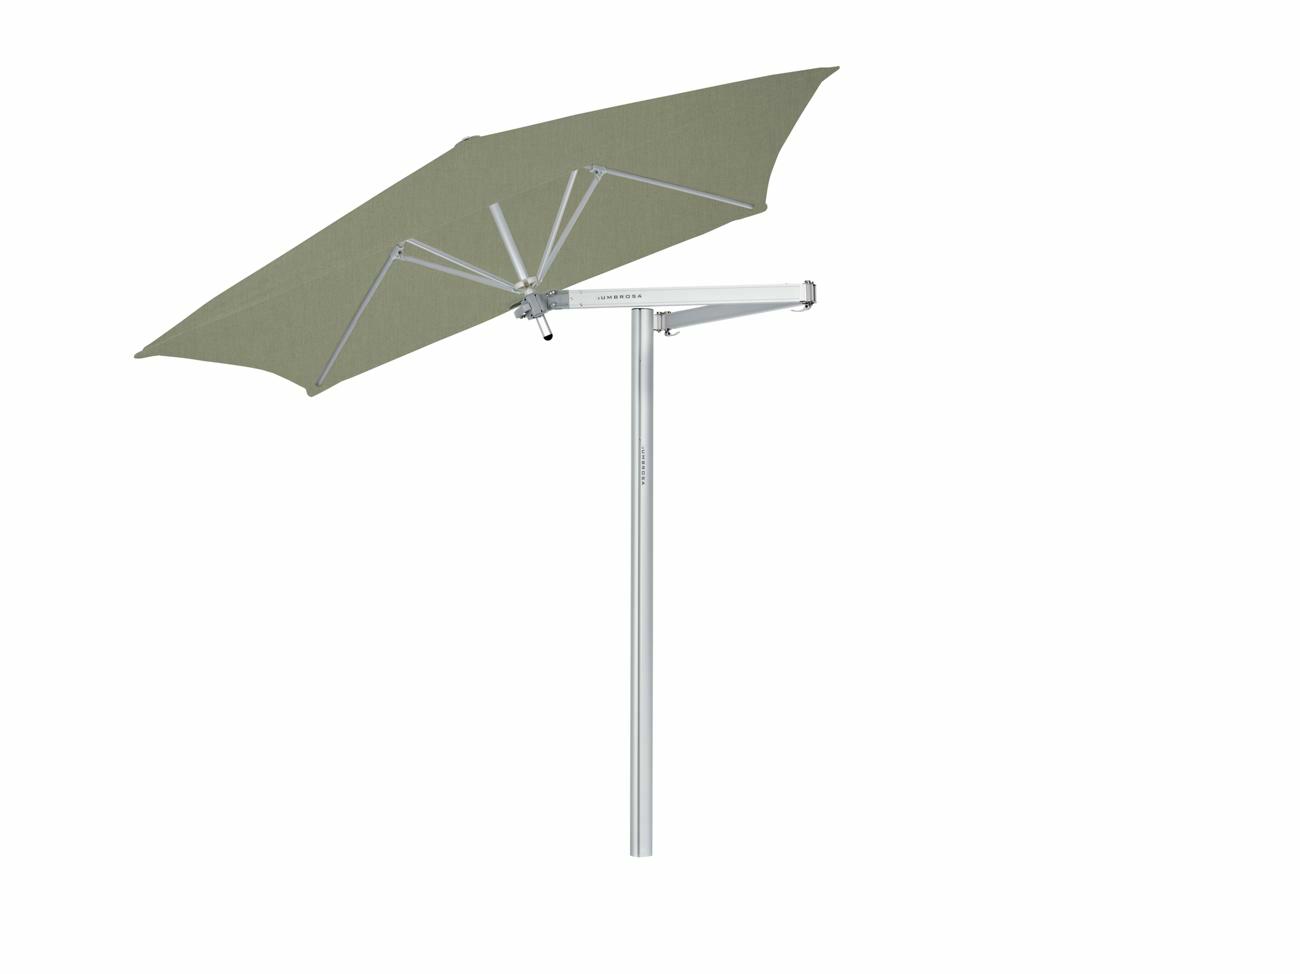 Paraflex cantilever umbrella square 1,9 m with Almond fabric and a Classic arm